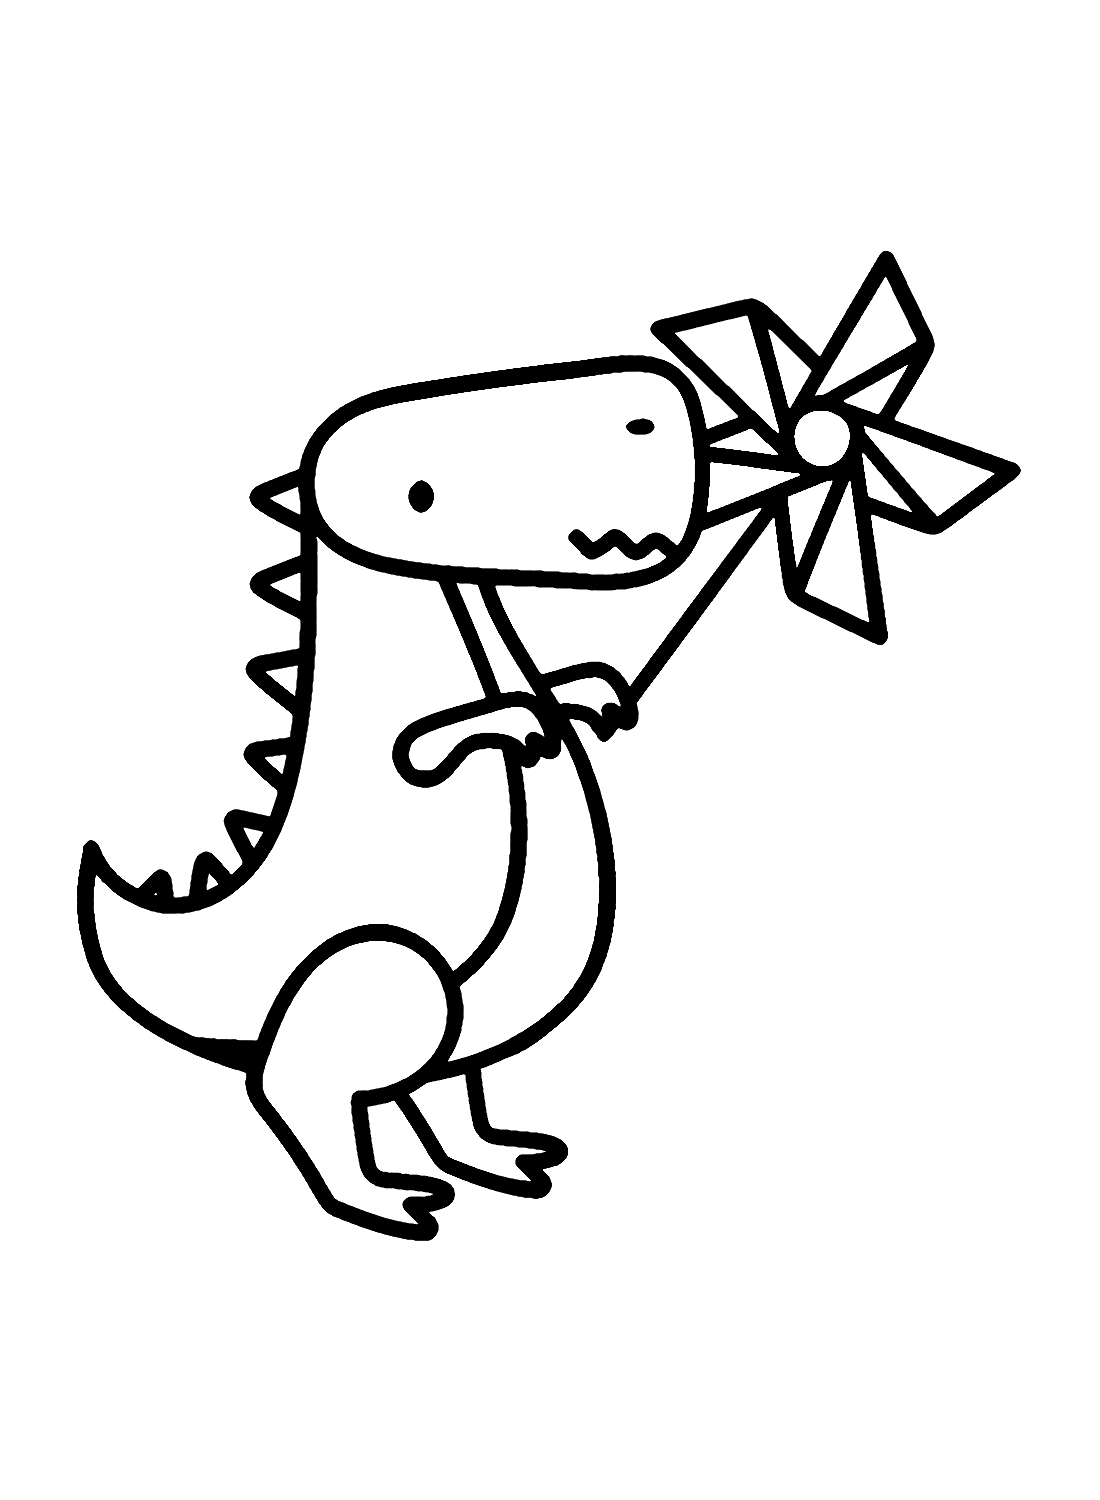 Dinosaur Holding Pinwheel Coloring Page - Free Printable Coloring Pages